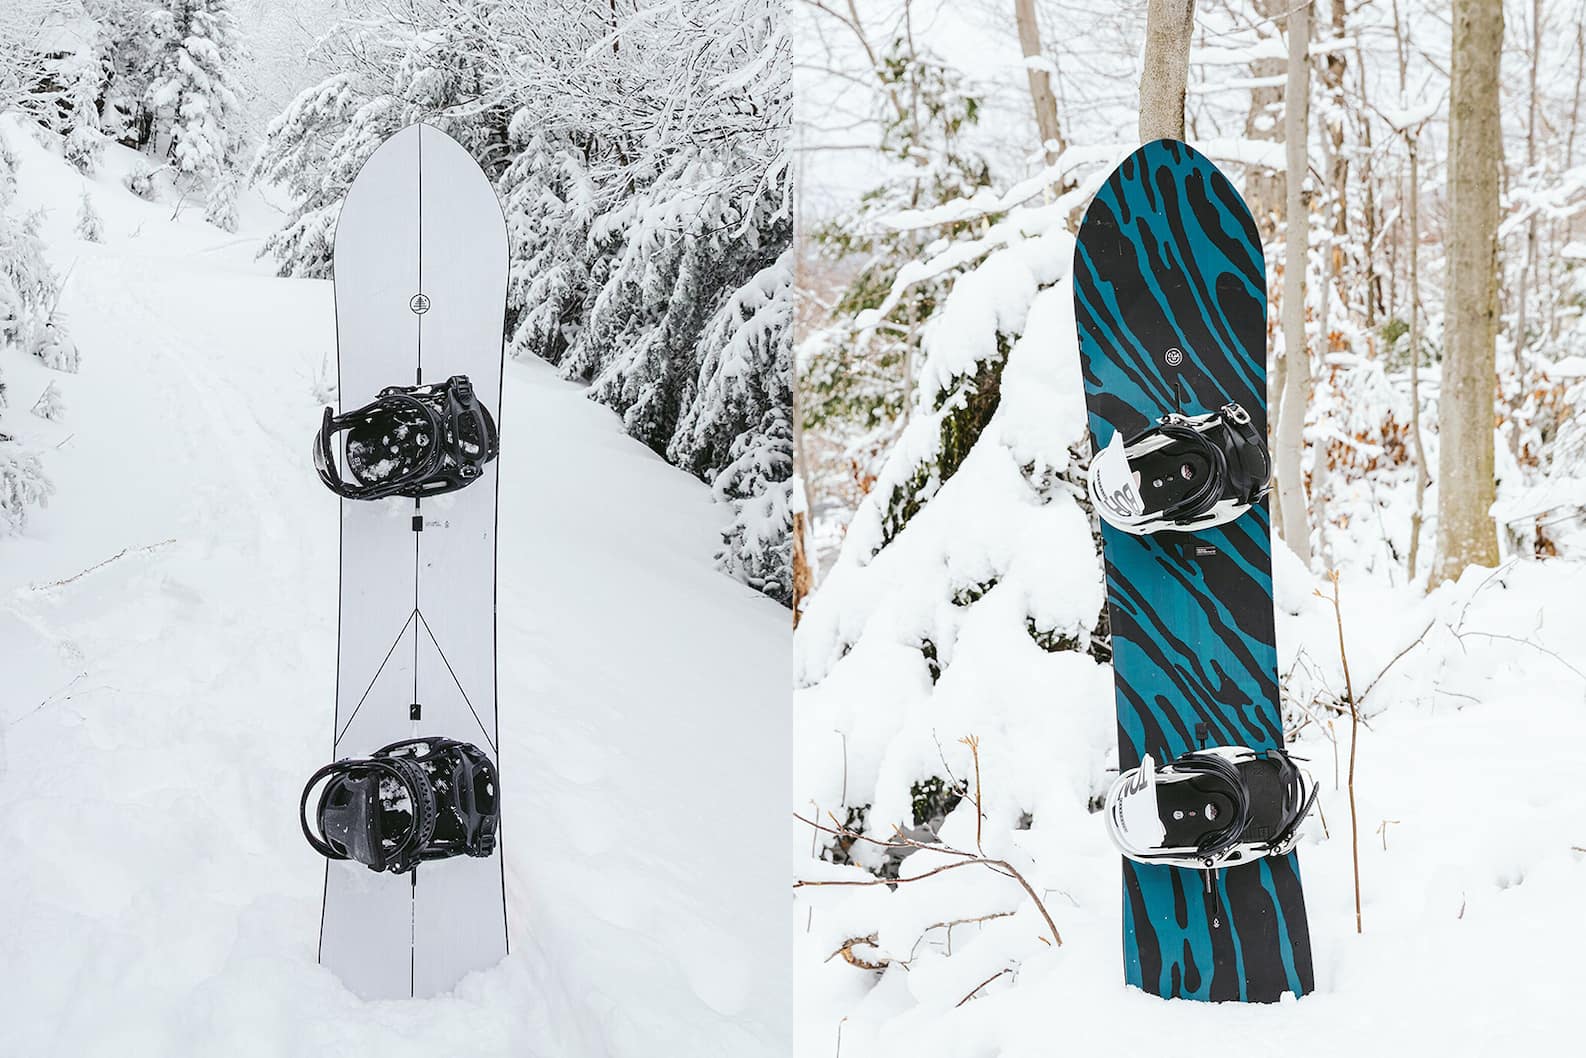 Double Deck Snowboard